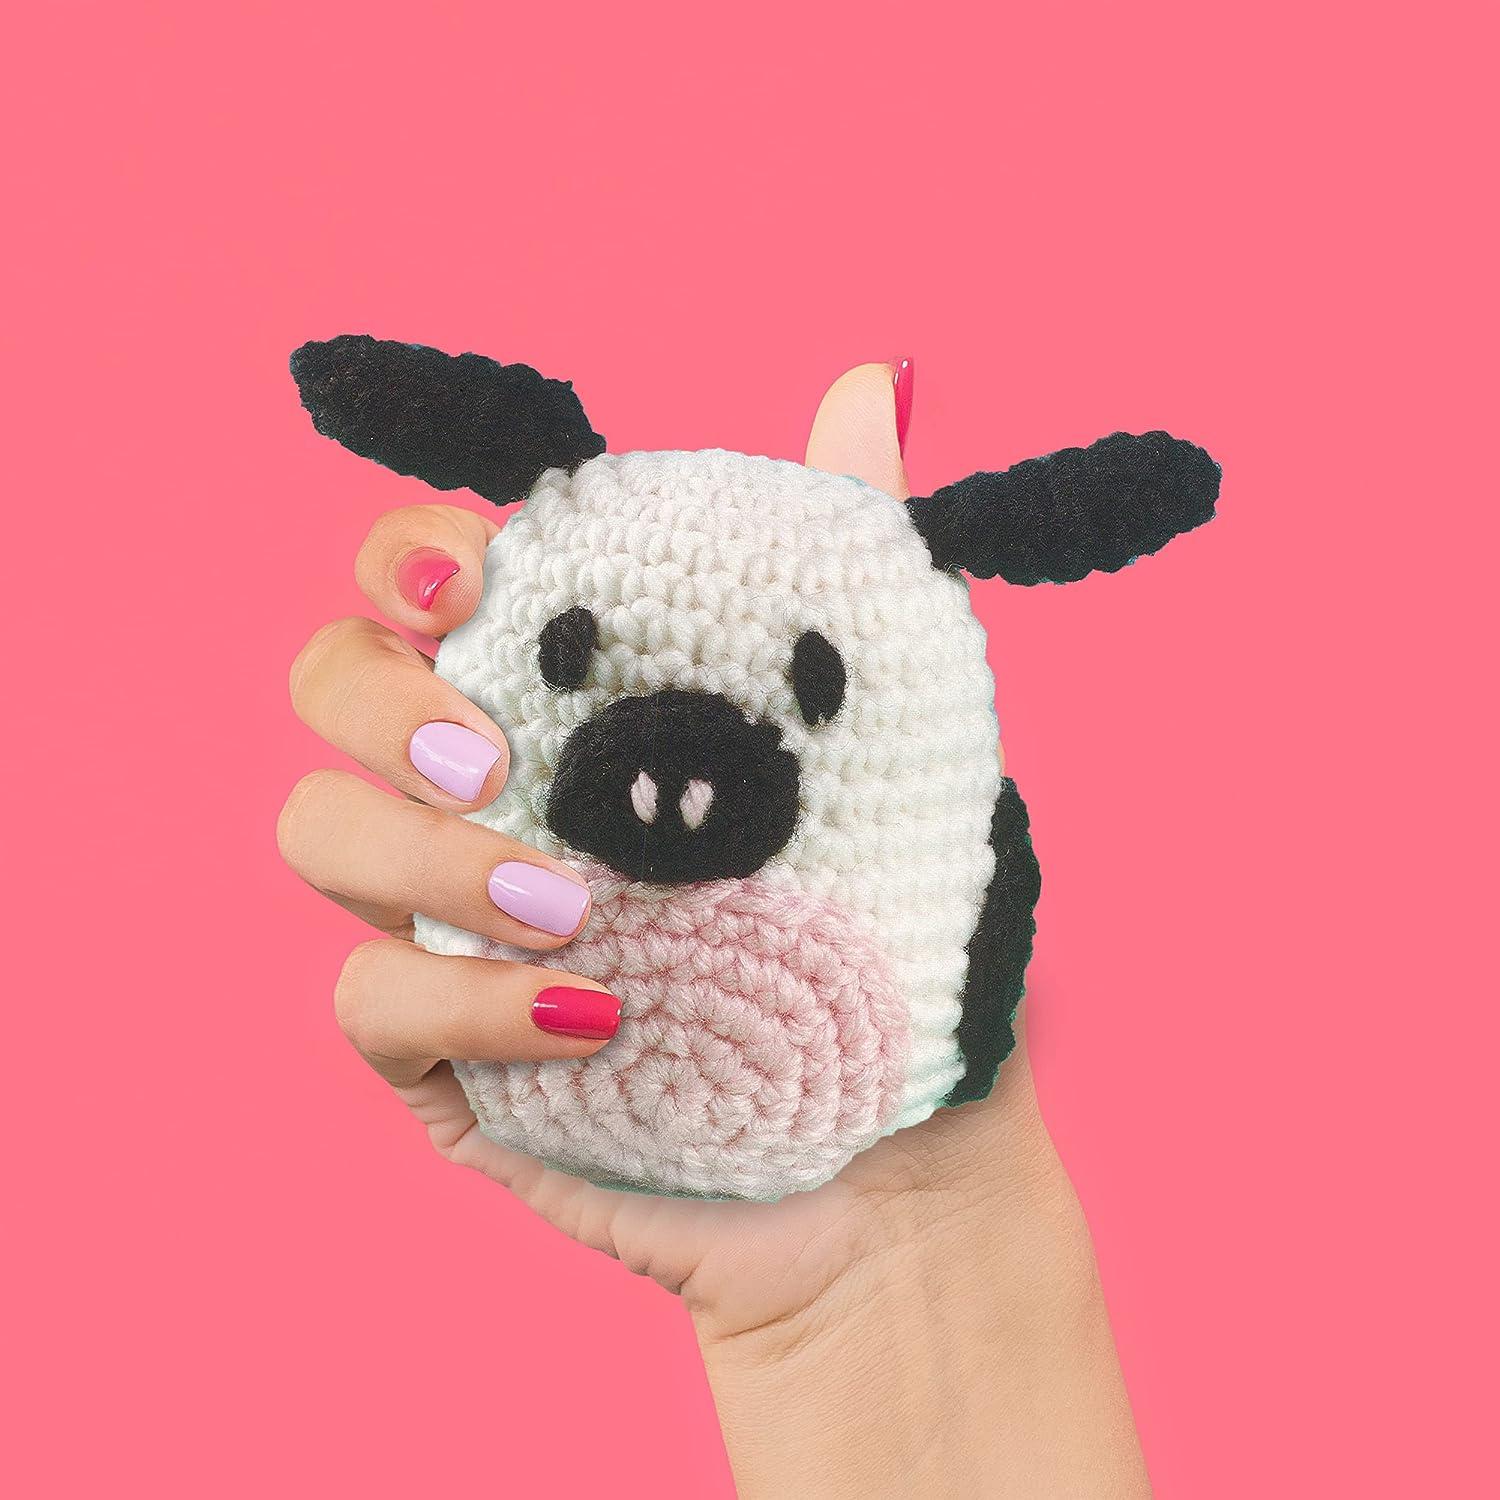 Leisure Arts Pudgies Animals Crochet Kit, Piggy, 3, Complete Crochet kit,  Learn to Crochet Animal Starter kit for All Ages, Includes Instructions,  DIY amigurumi Crochet Kits